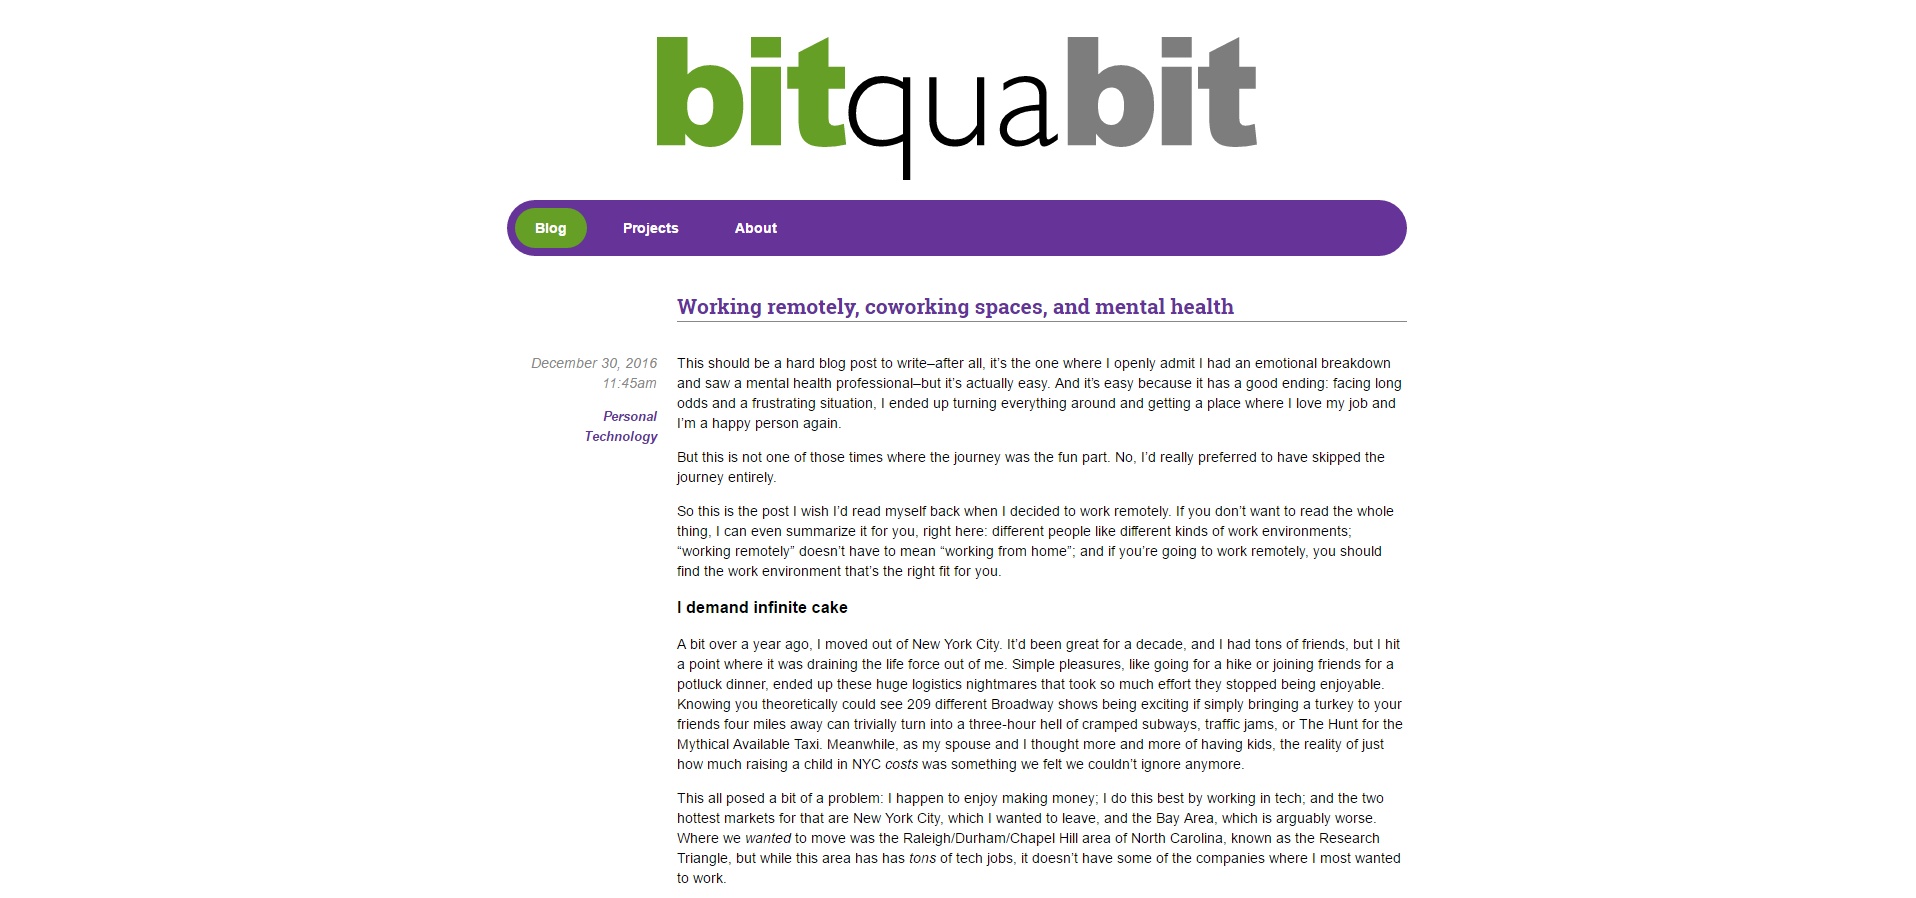 bitquabit Developer Blog On Coworking, Remote Working, and Mental Health